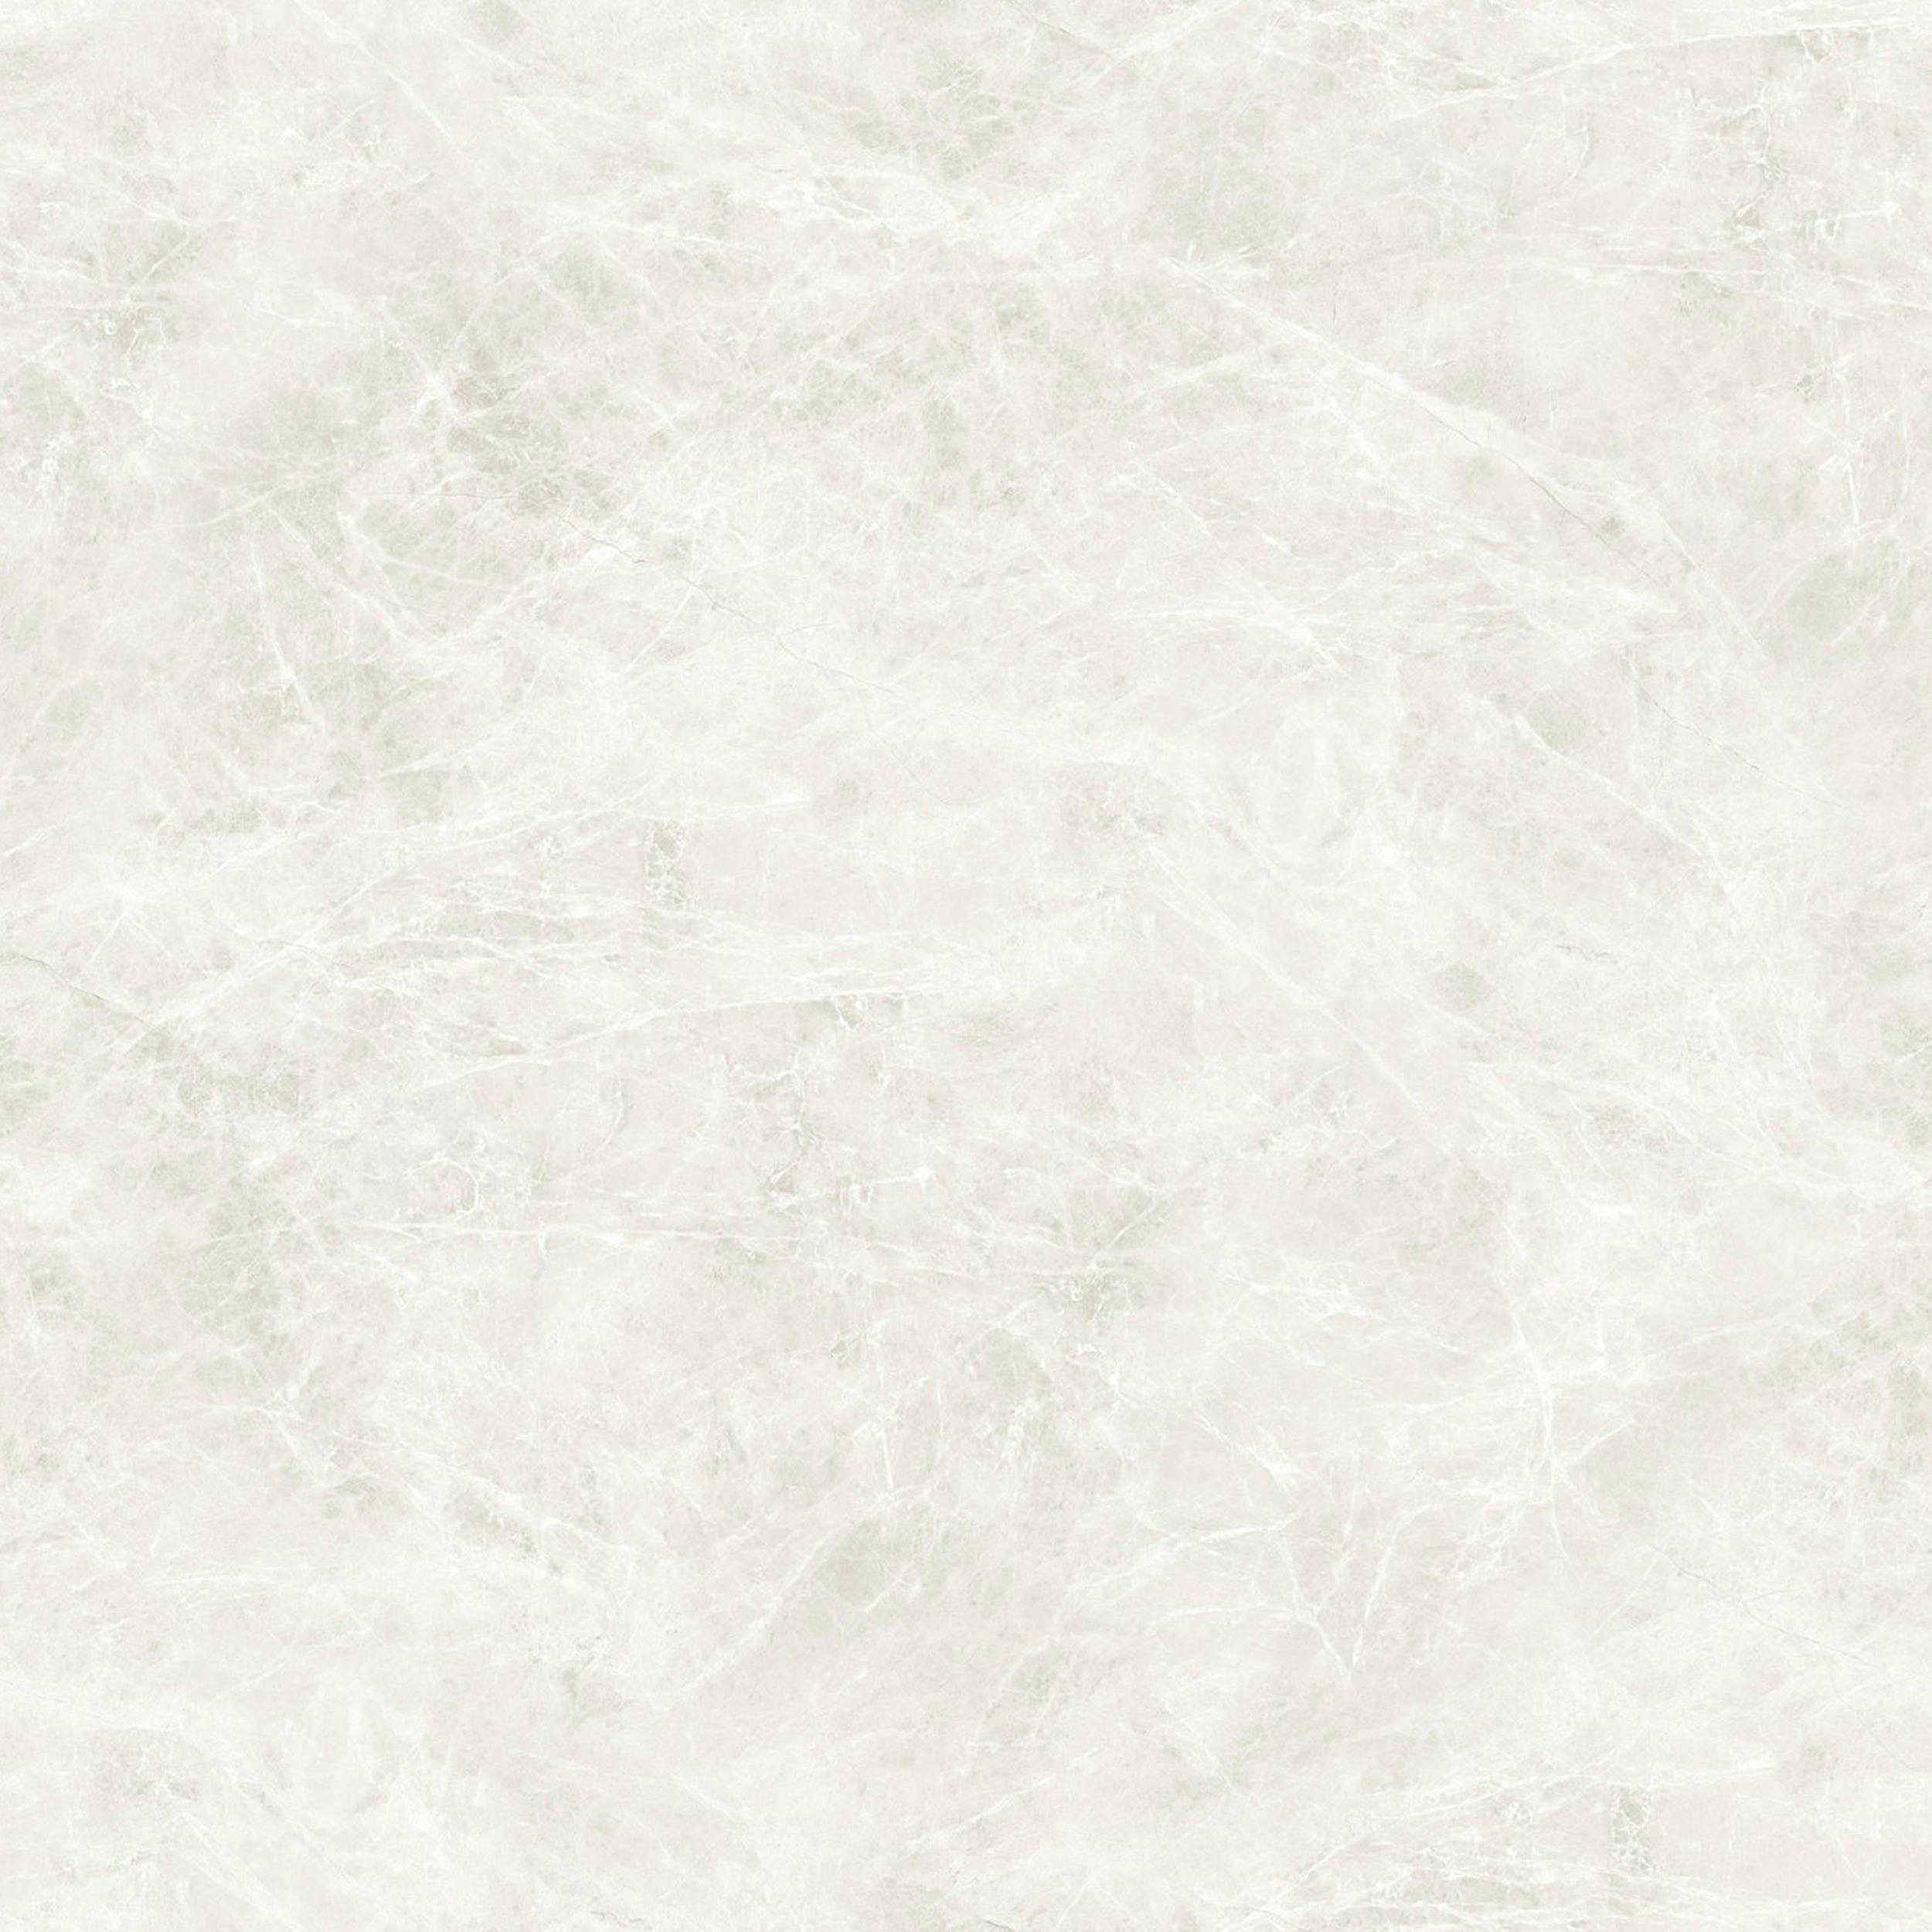 White and Brown Seamless Concrete Wall · Free Stock Photo